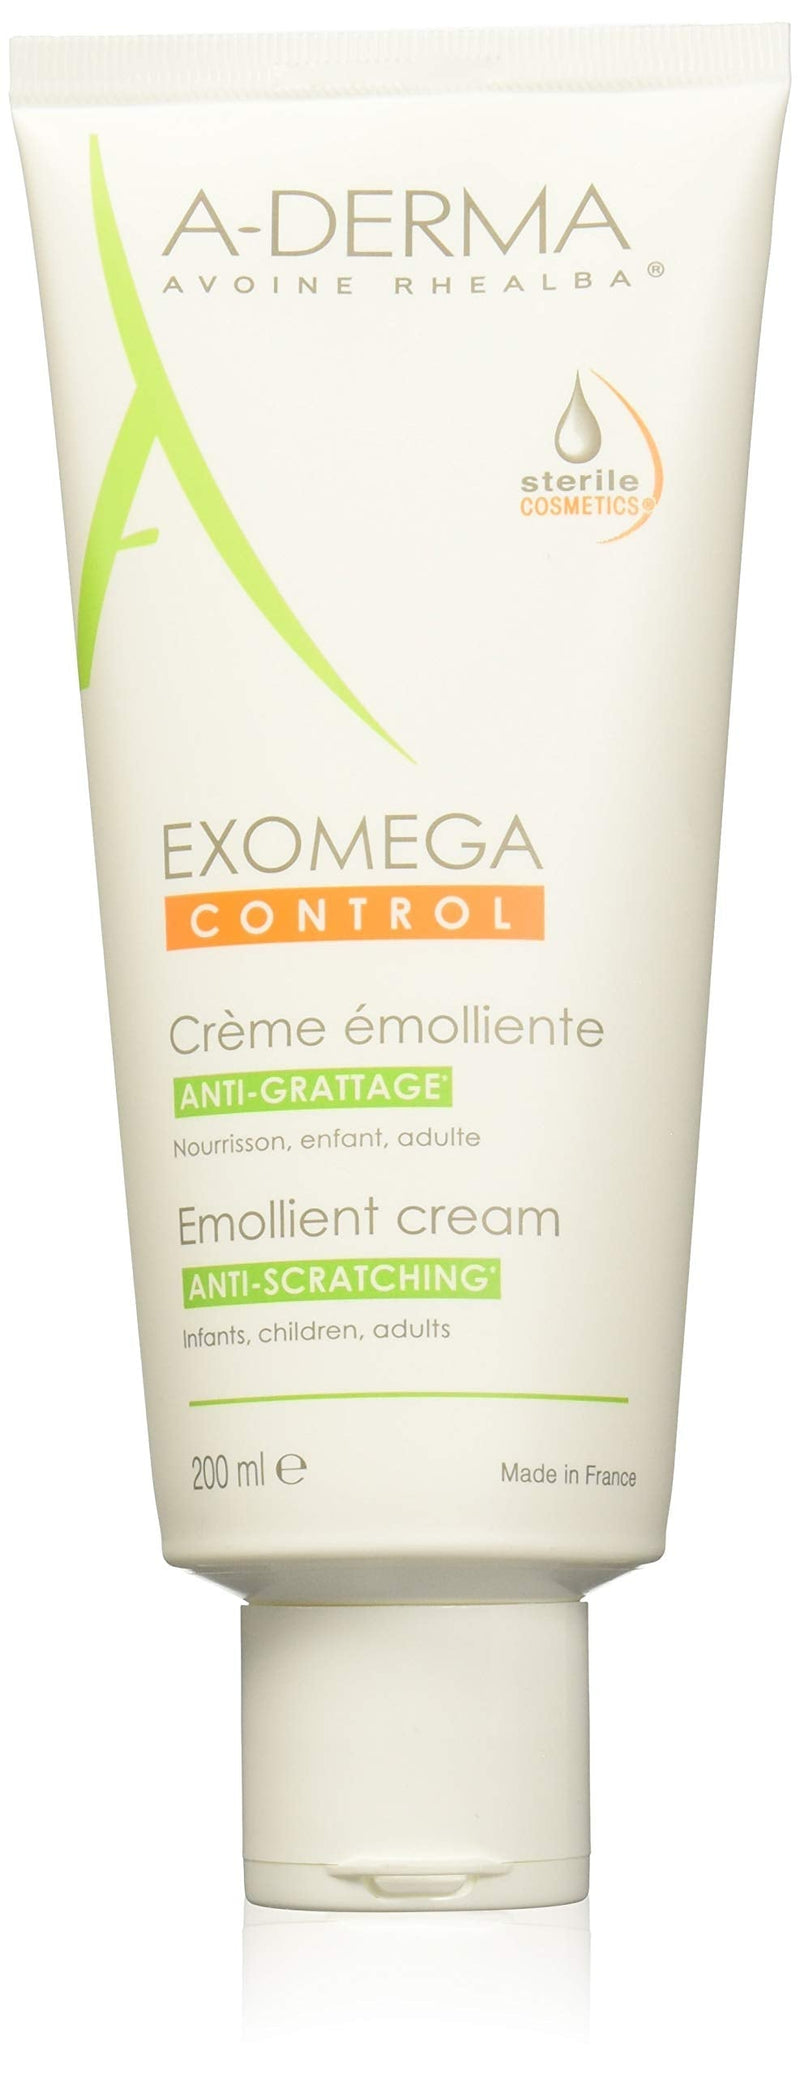 [Australia] - A-Derma Exomega Control Emollient Cream 200ml 